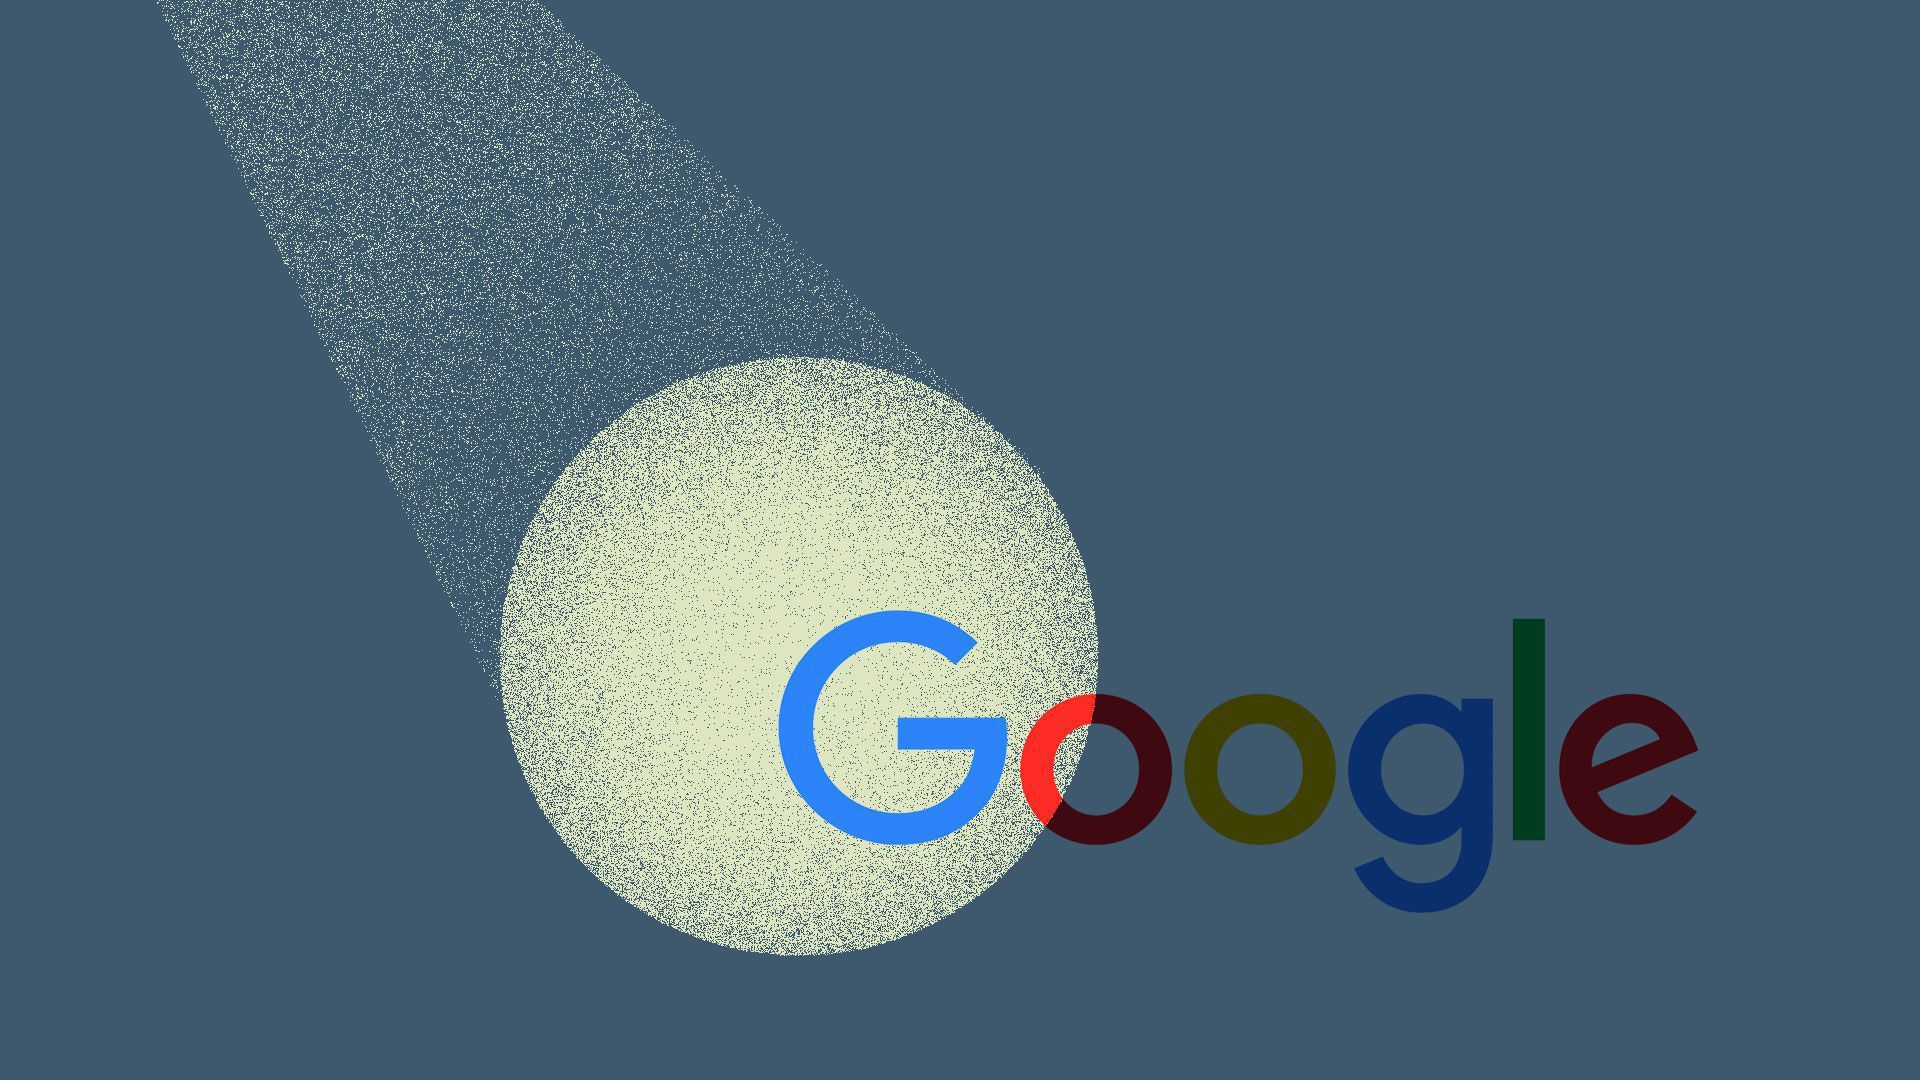 A spotlight on the word Google